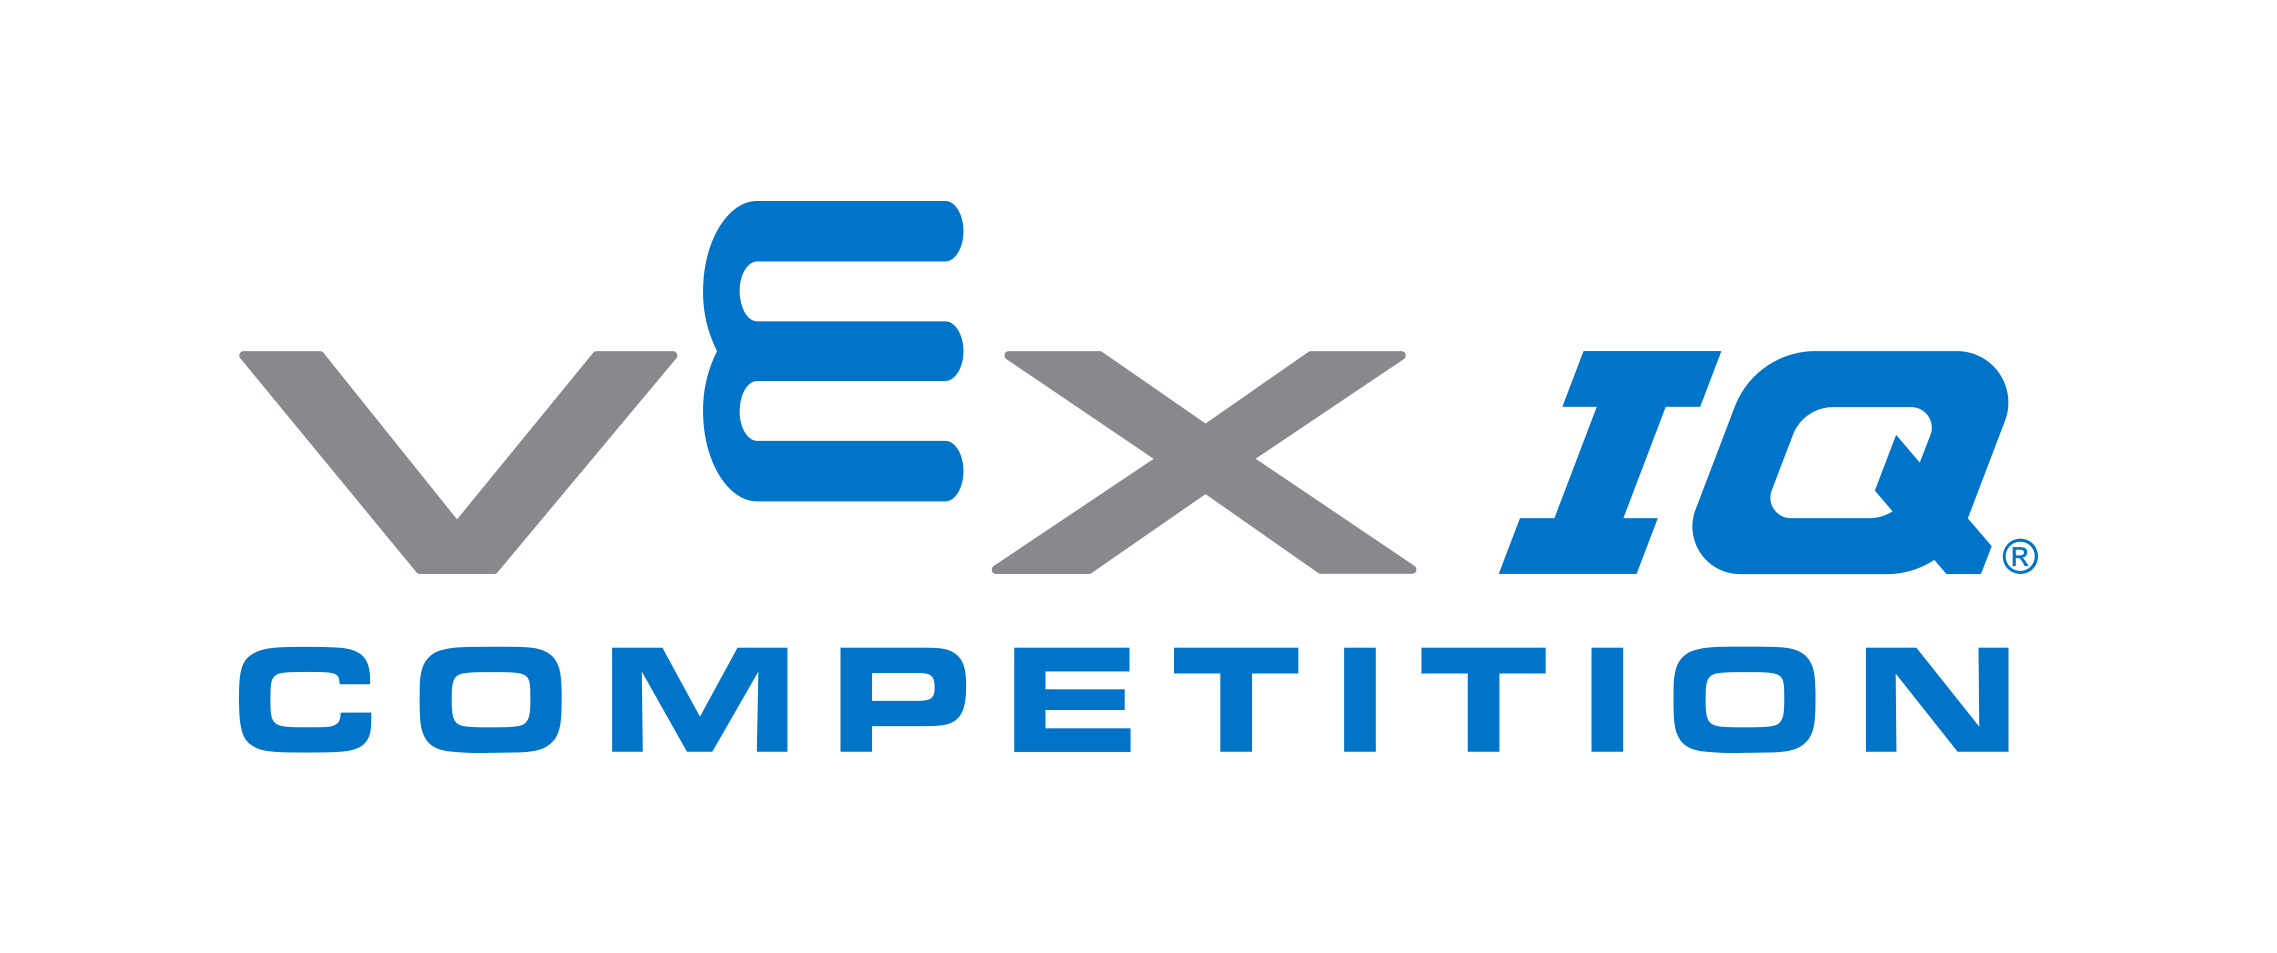 VEX IQ Competition